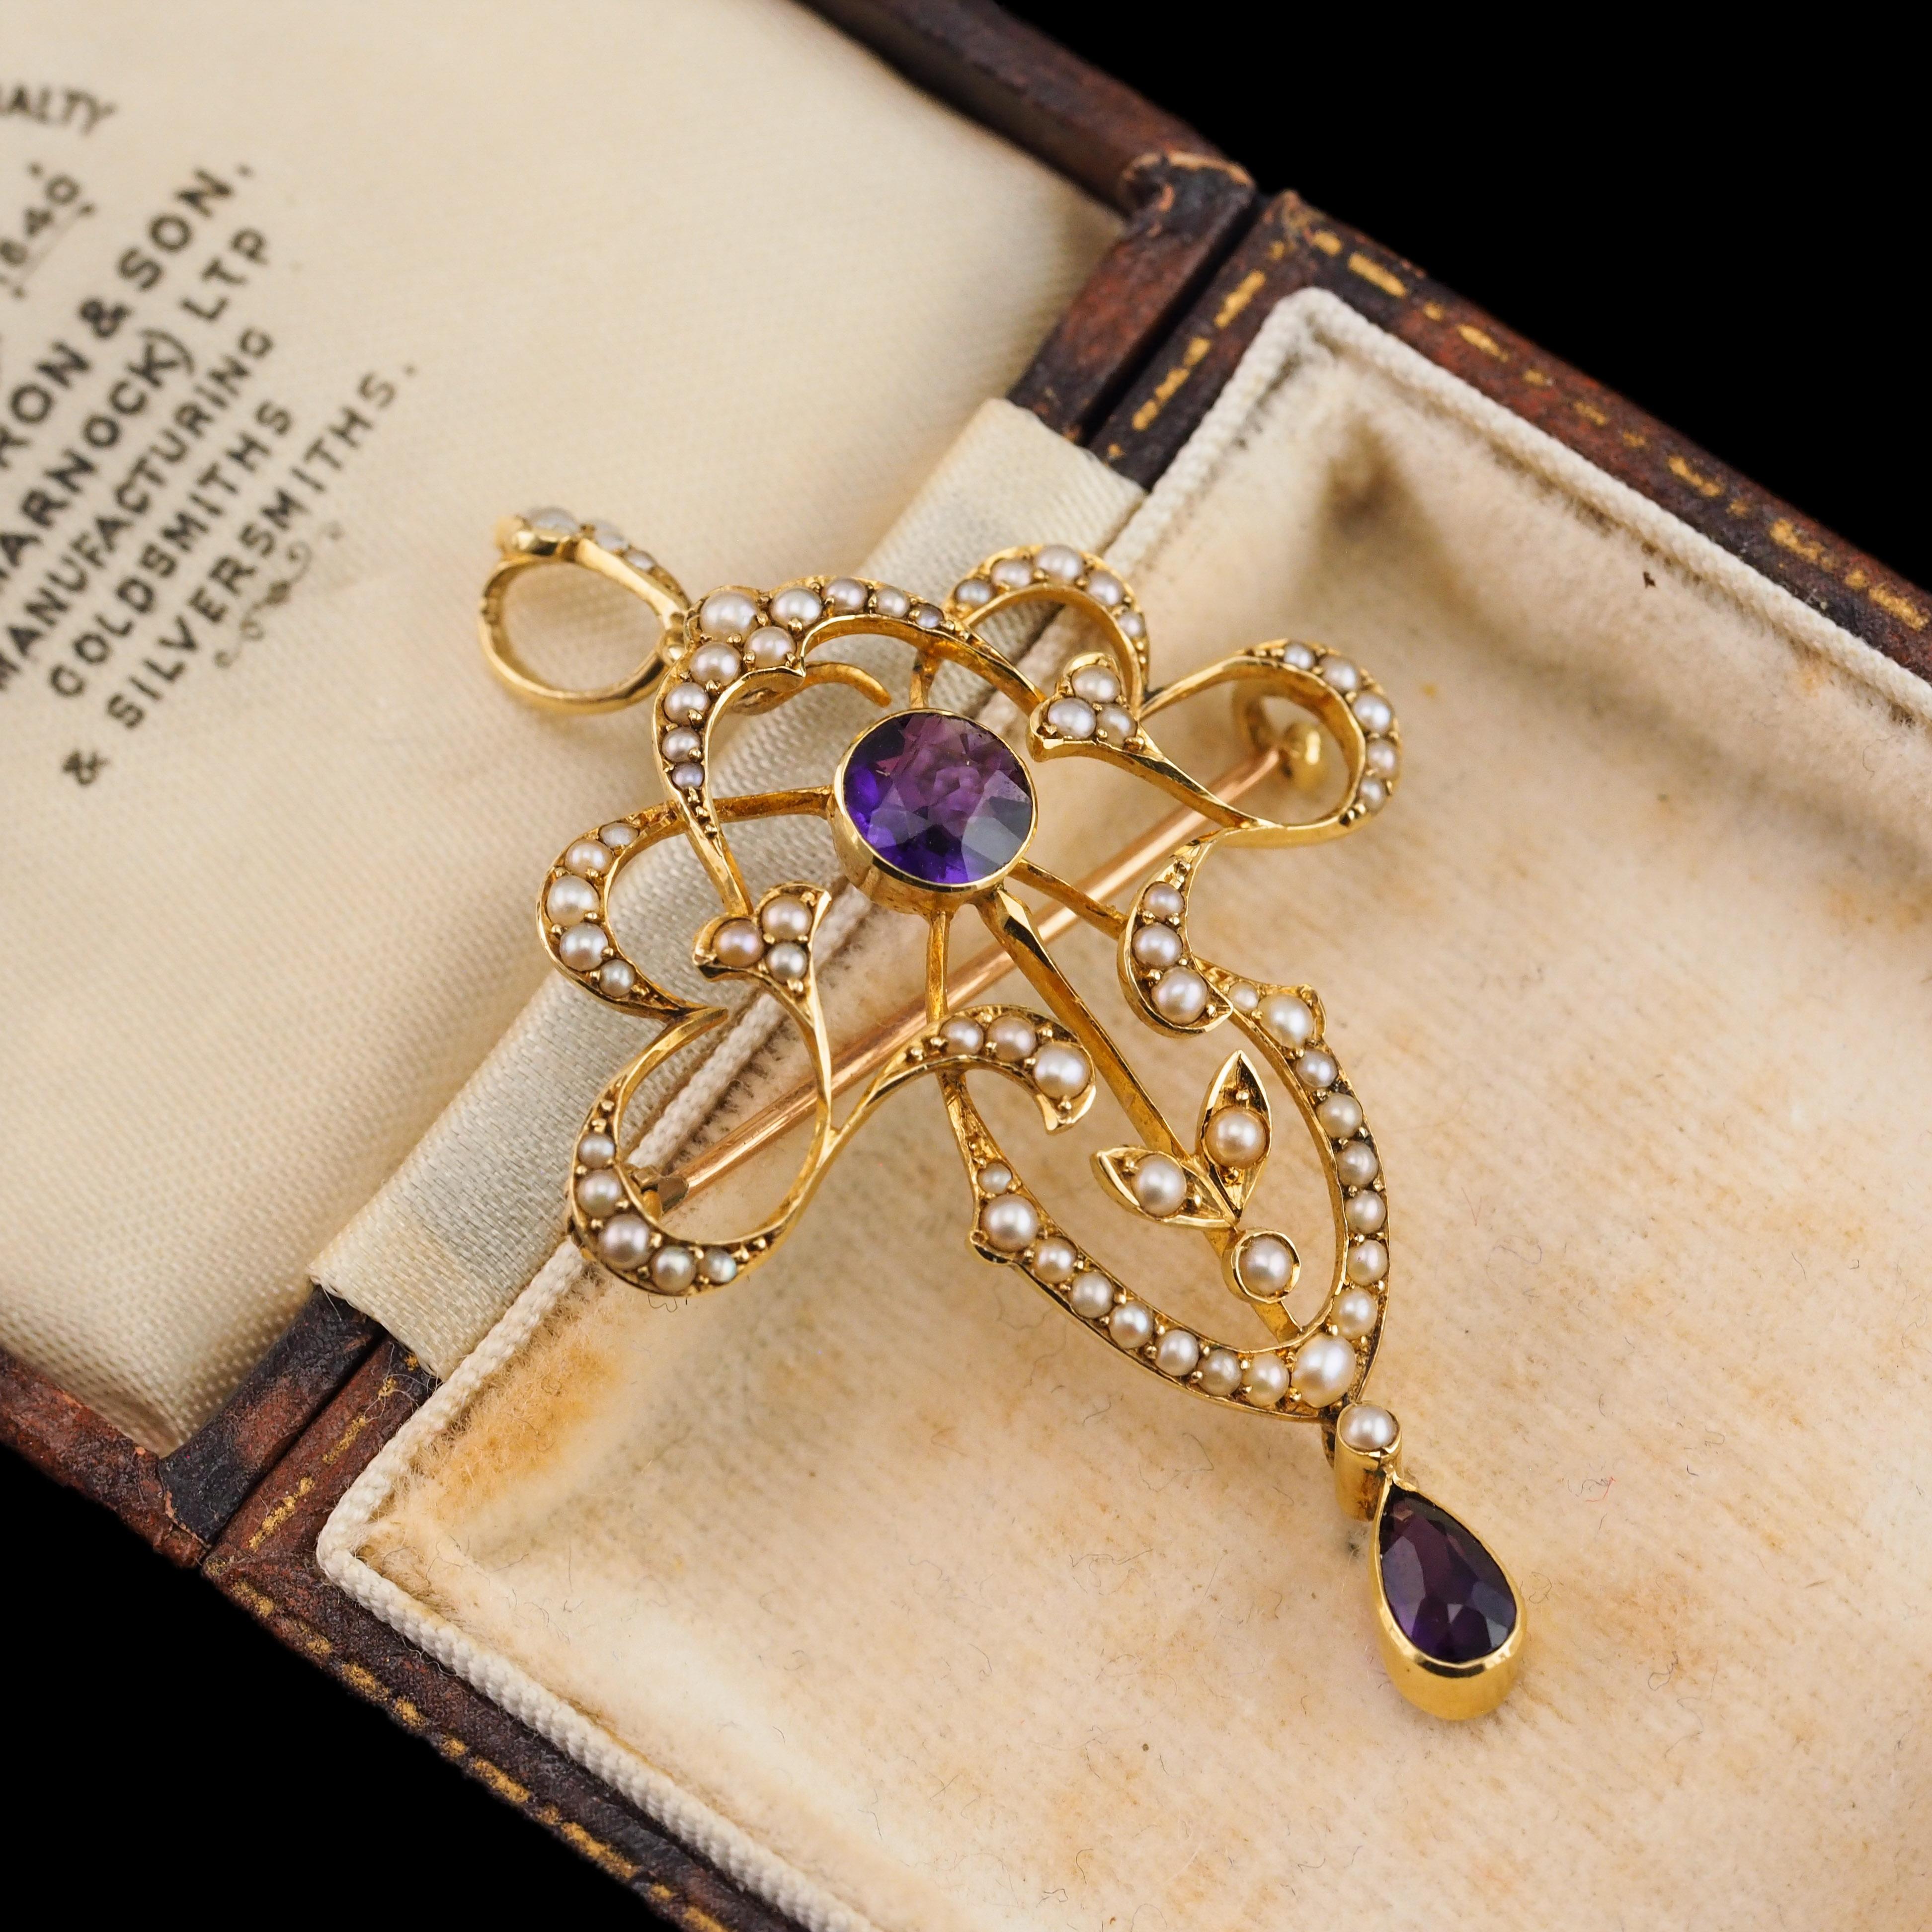 Antique Edwardian Amethyst & Seed Pearl 15K Gold Pendant Necklace Art Nouveau  For Sale 3